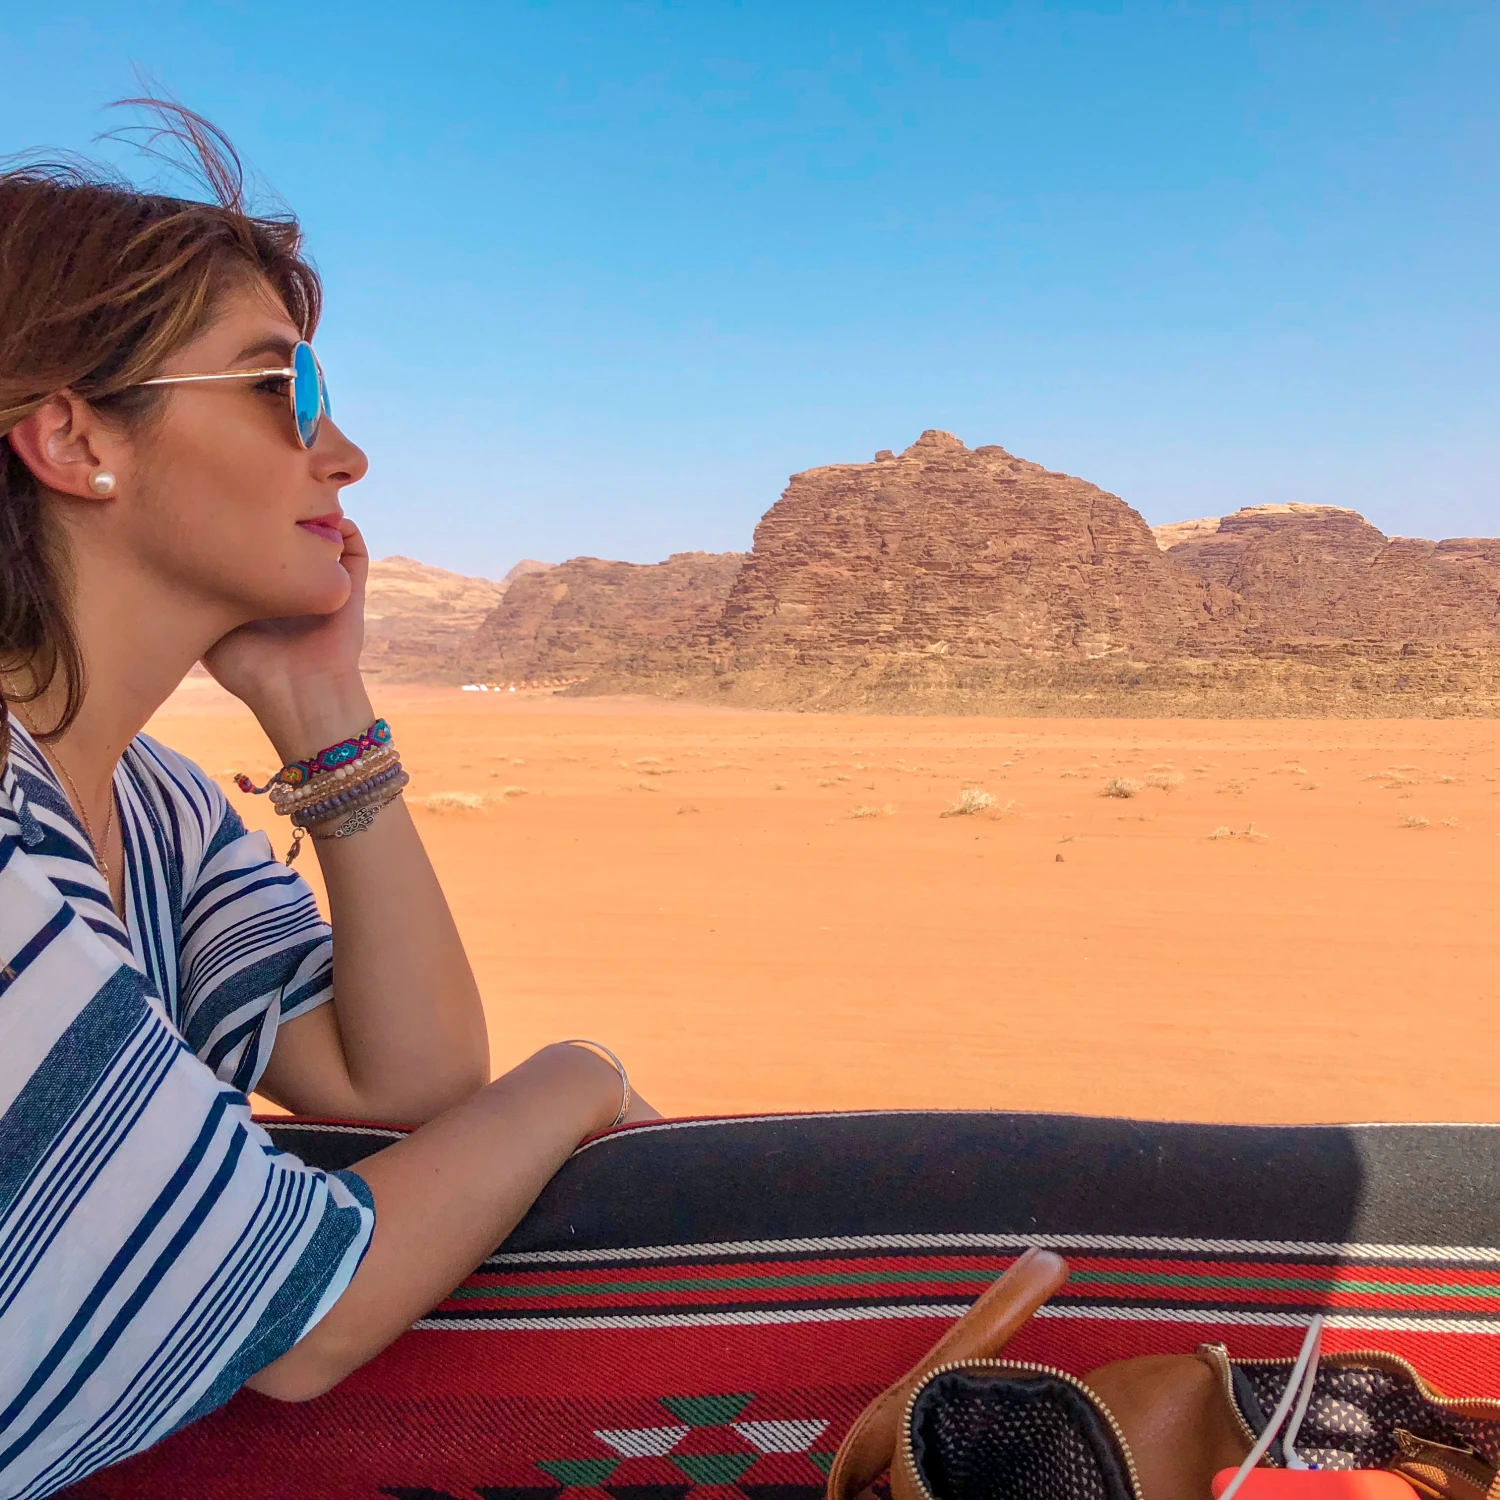 A woman posing in a desert